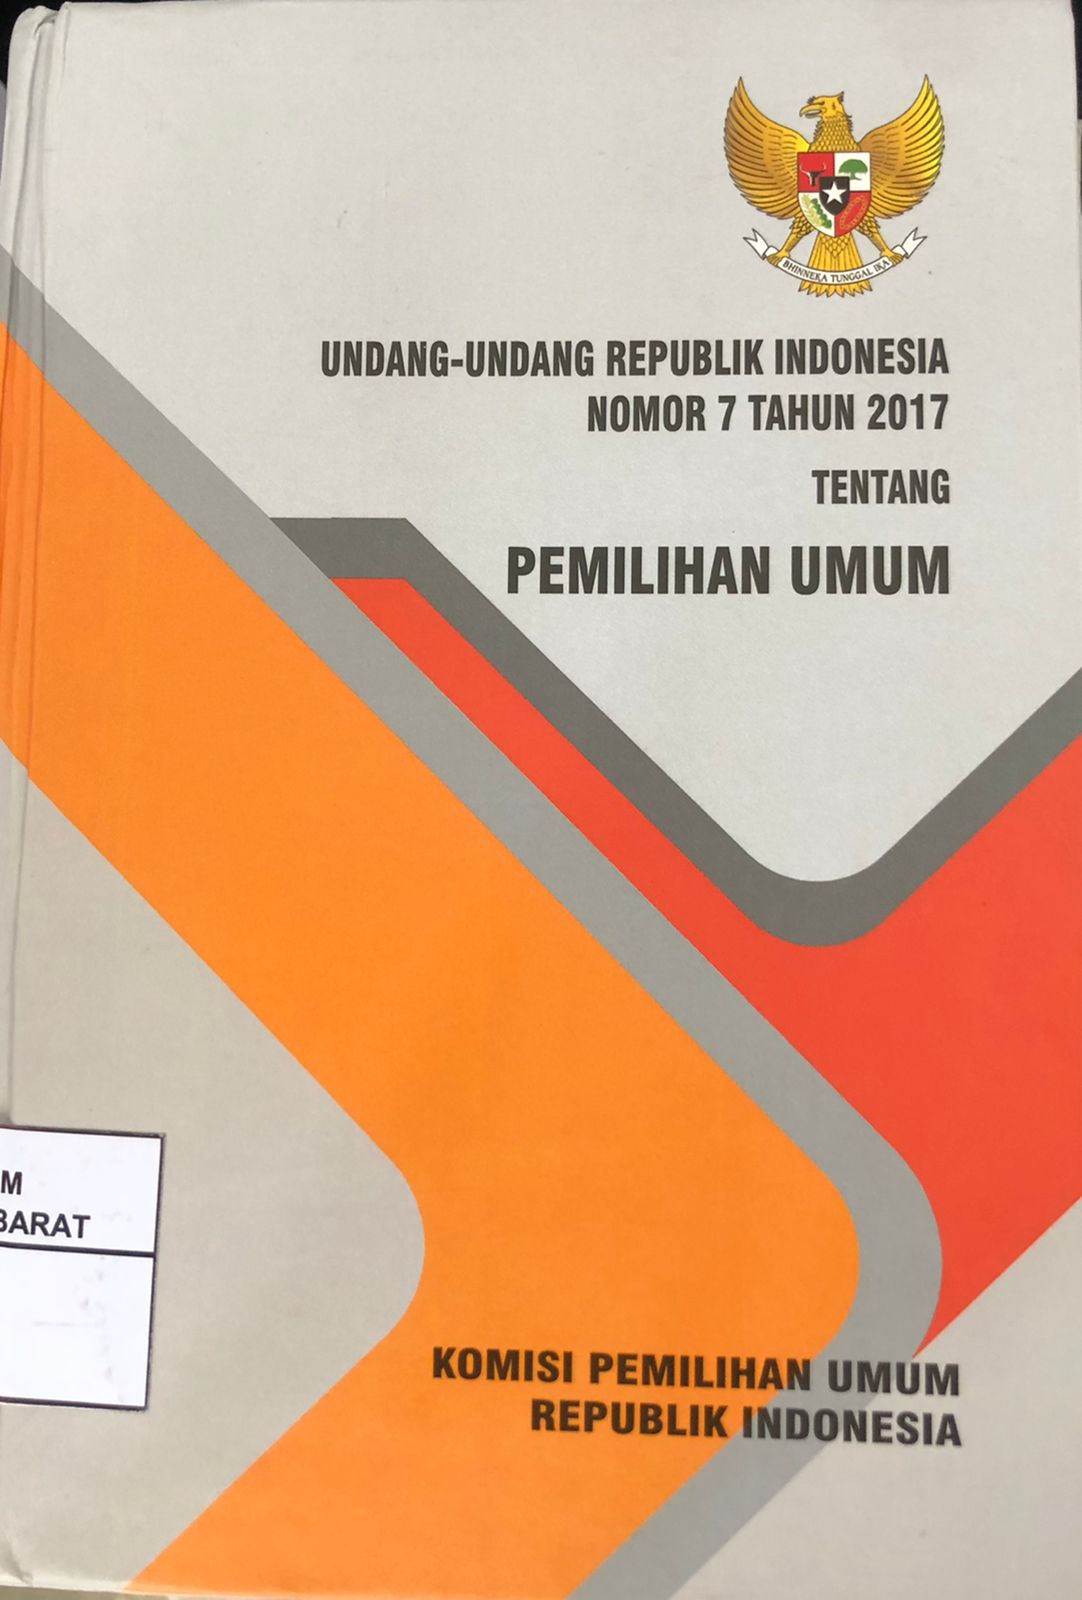 Undang-Undang Republik Indonesia No. 7 tahun 2017 Tentang Pemilihan Umum